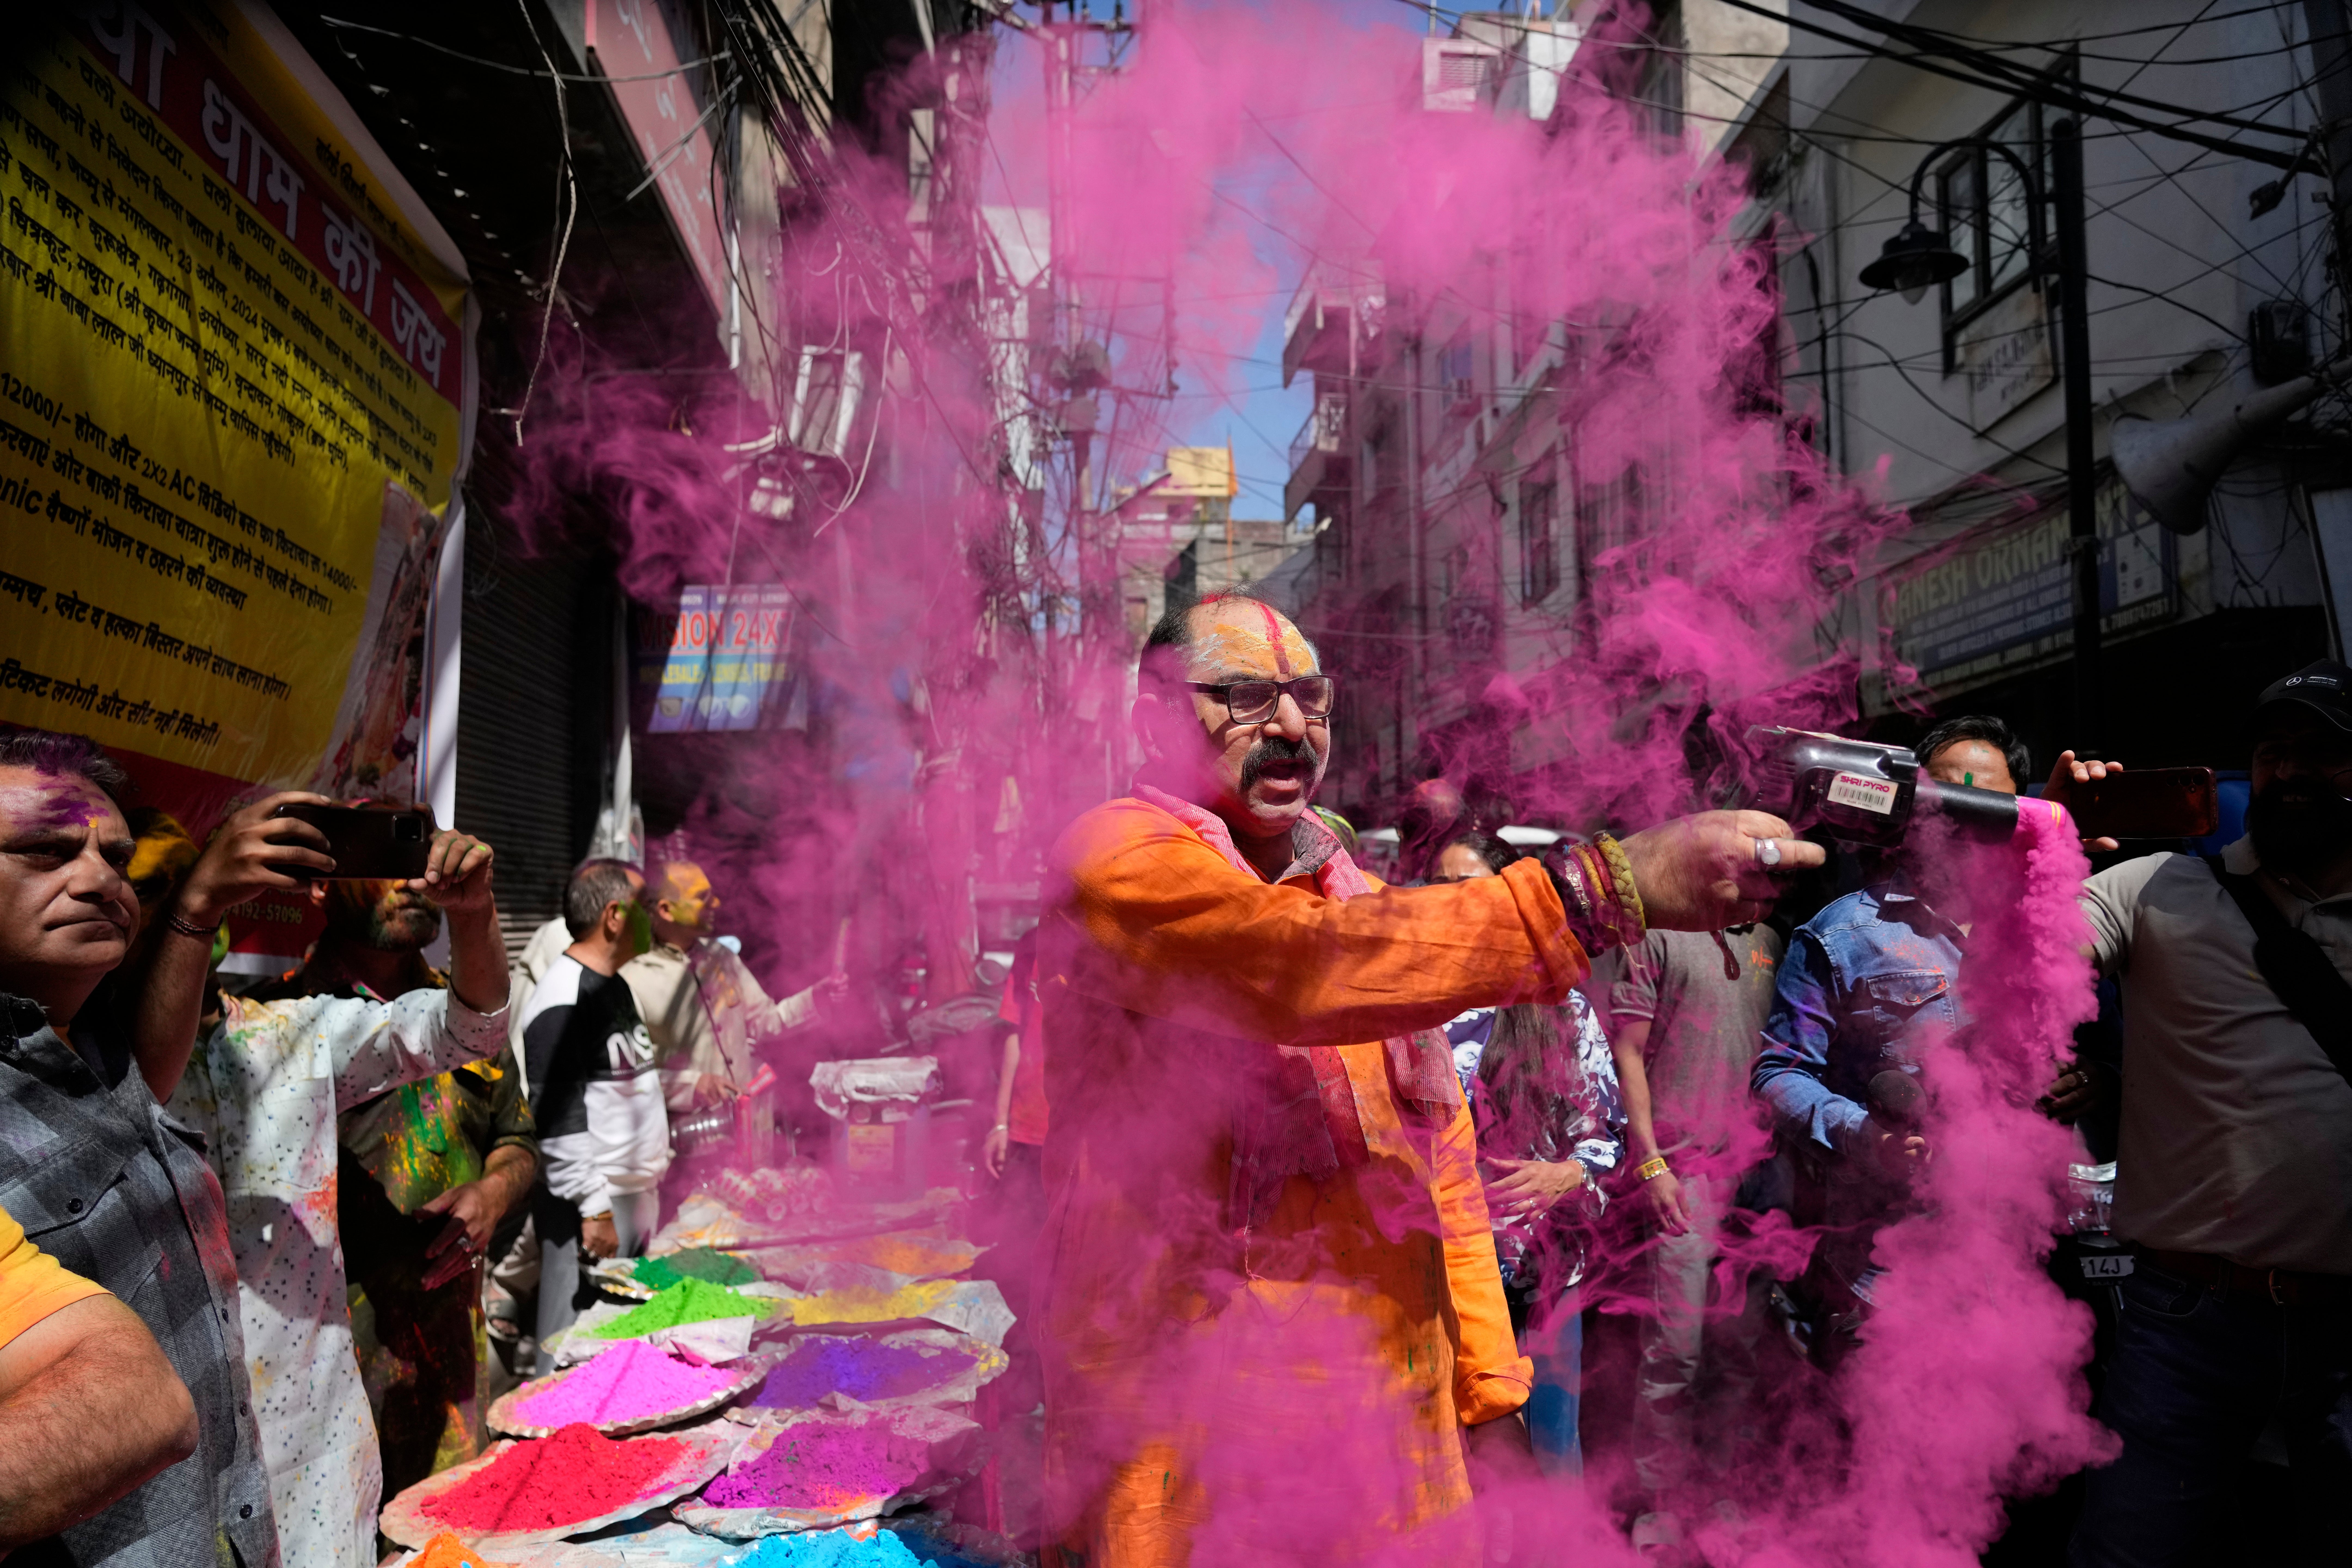 A Hindu man sprays coloured powder as people celebrate Holi, the Hindu festival of colors, in Jammu, India